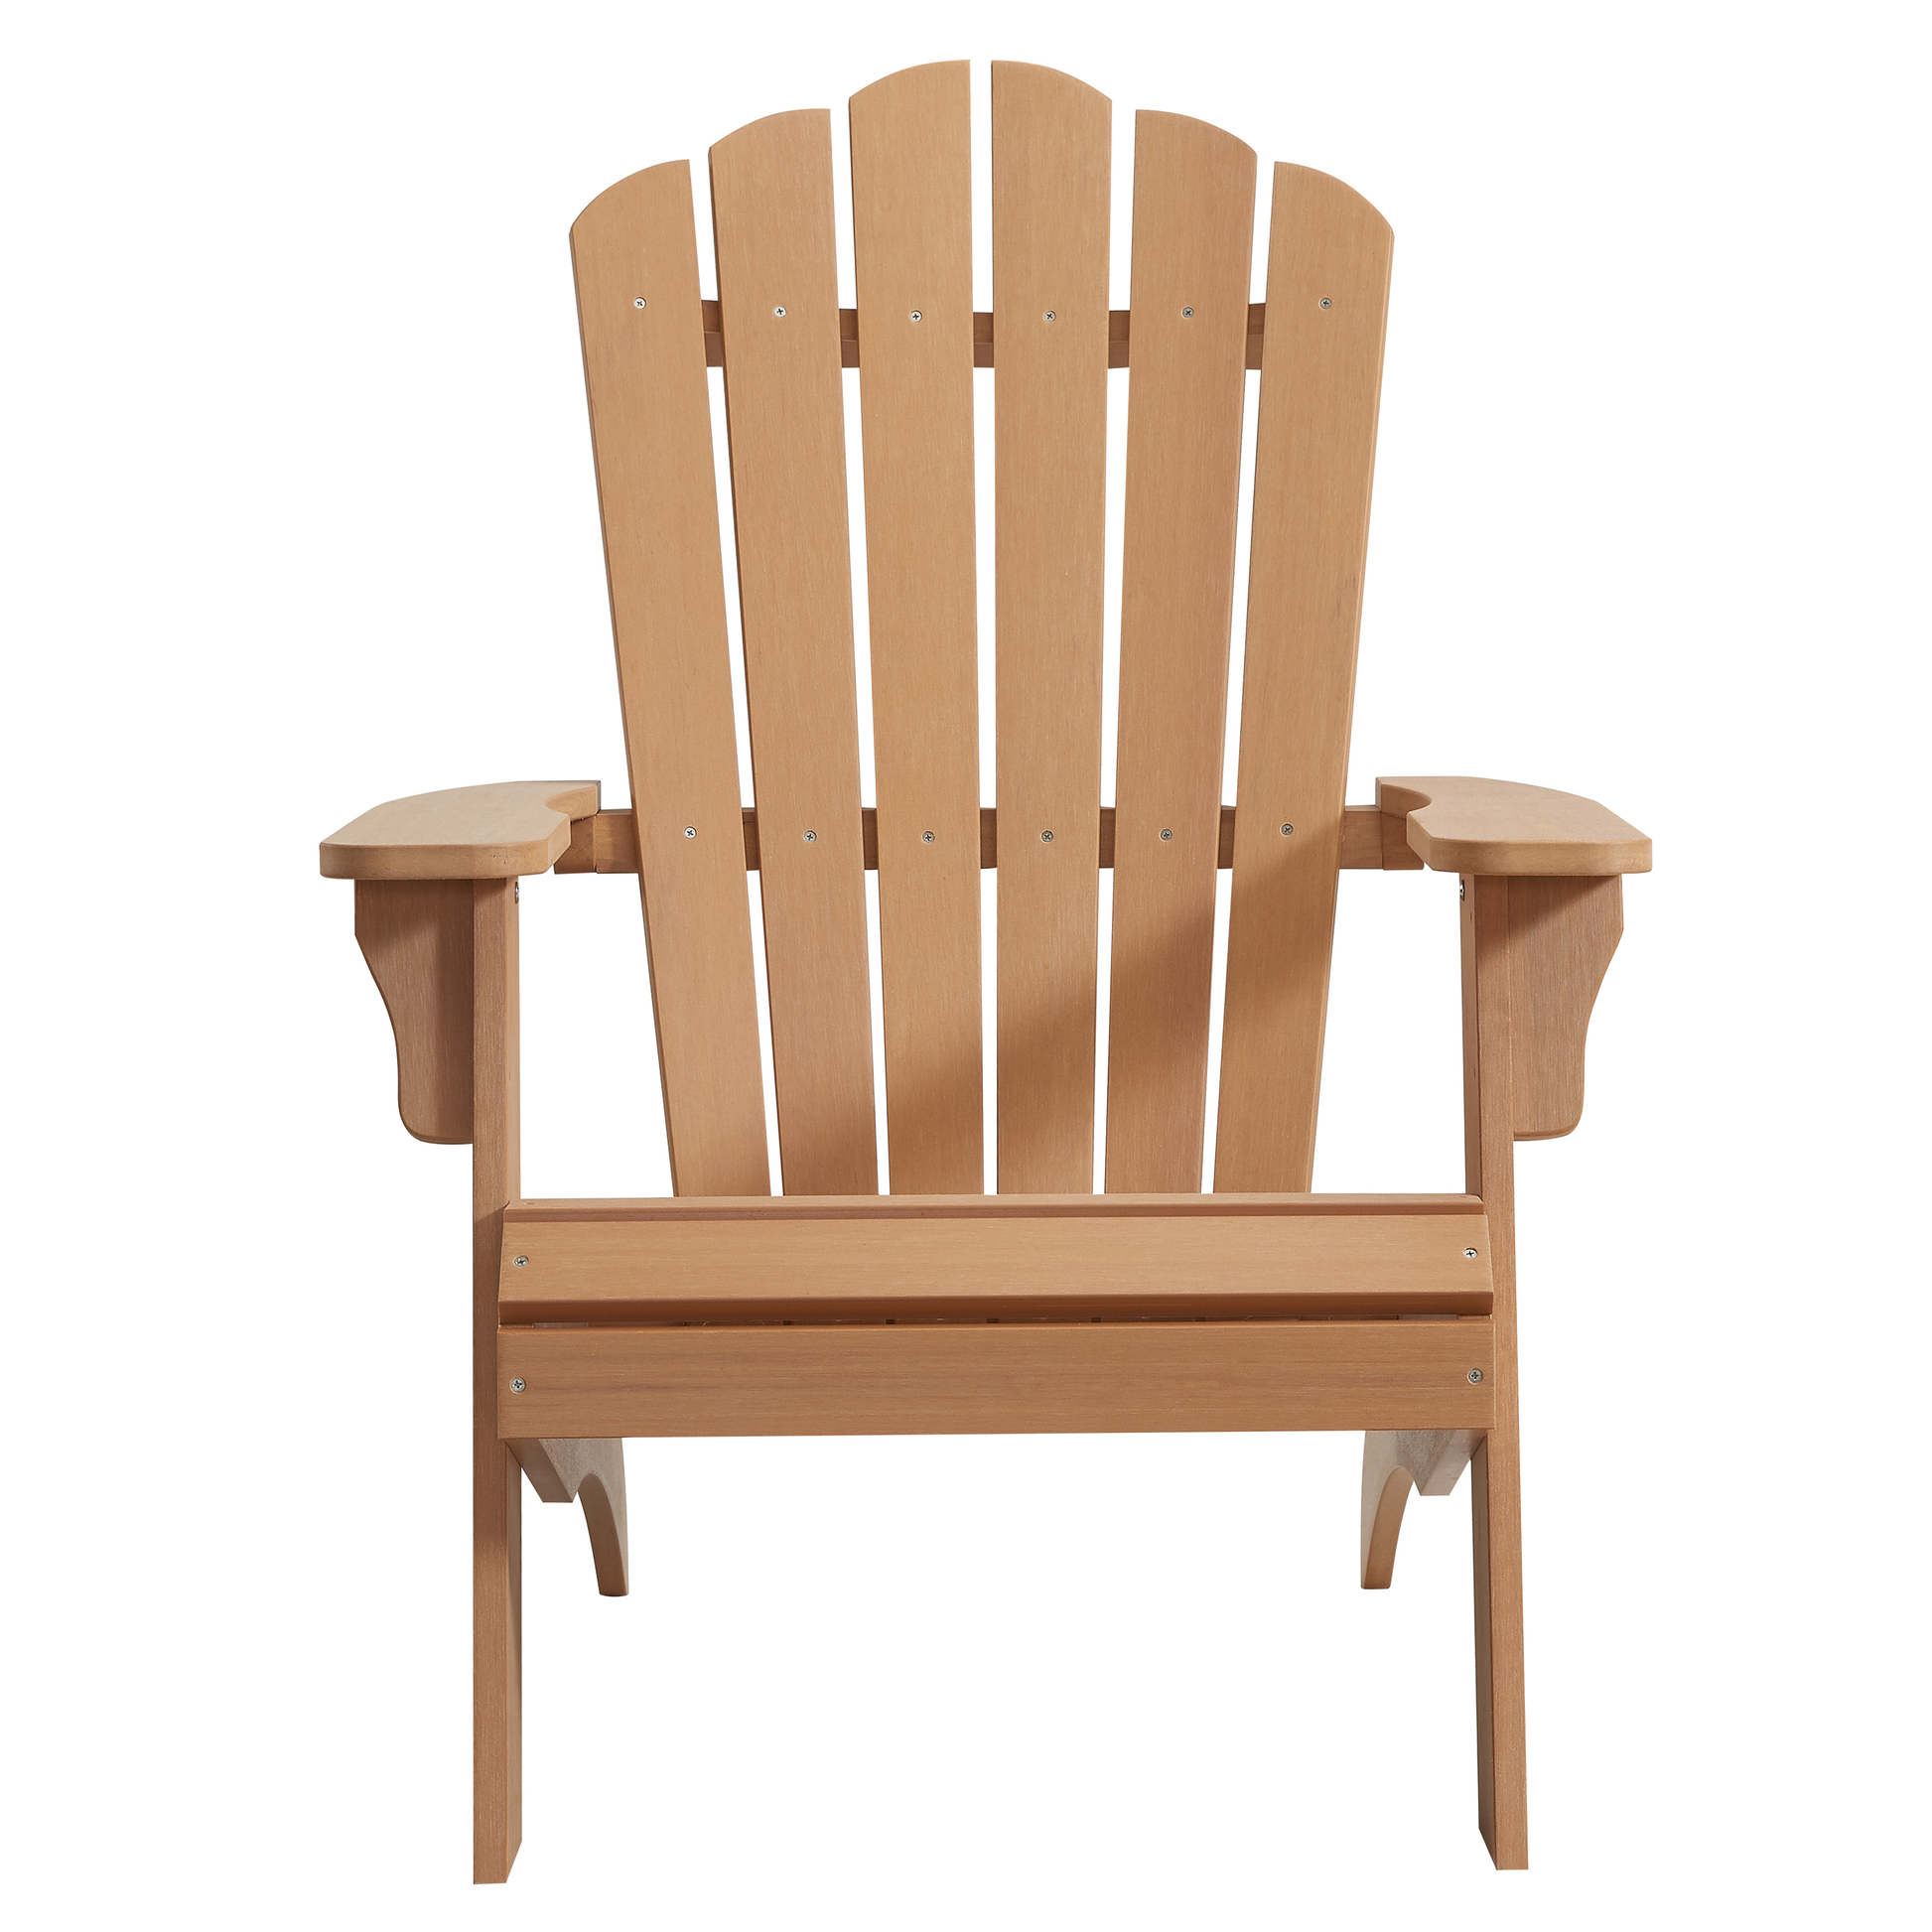 Adirondack chairs, garden furniture, zero maintenance outdoor furniture